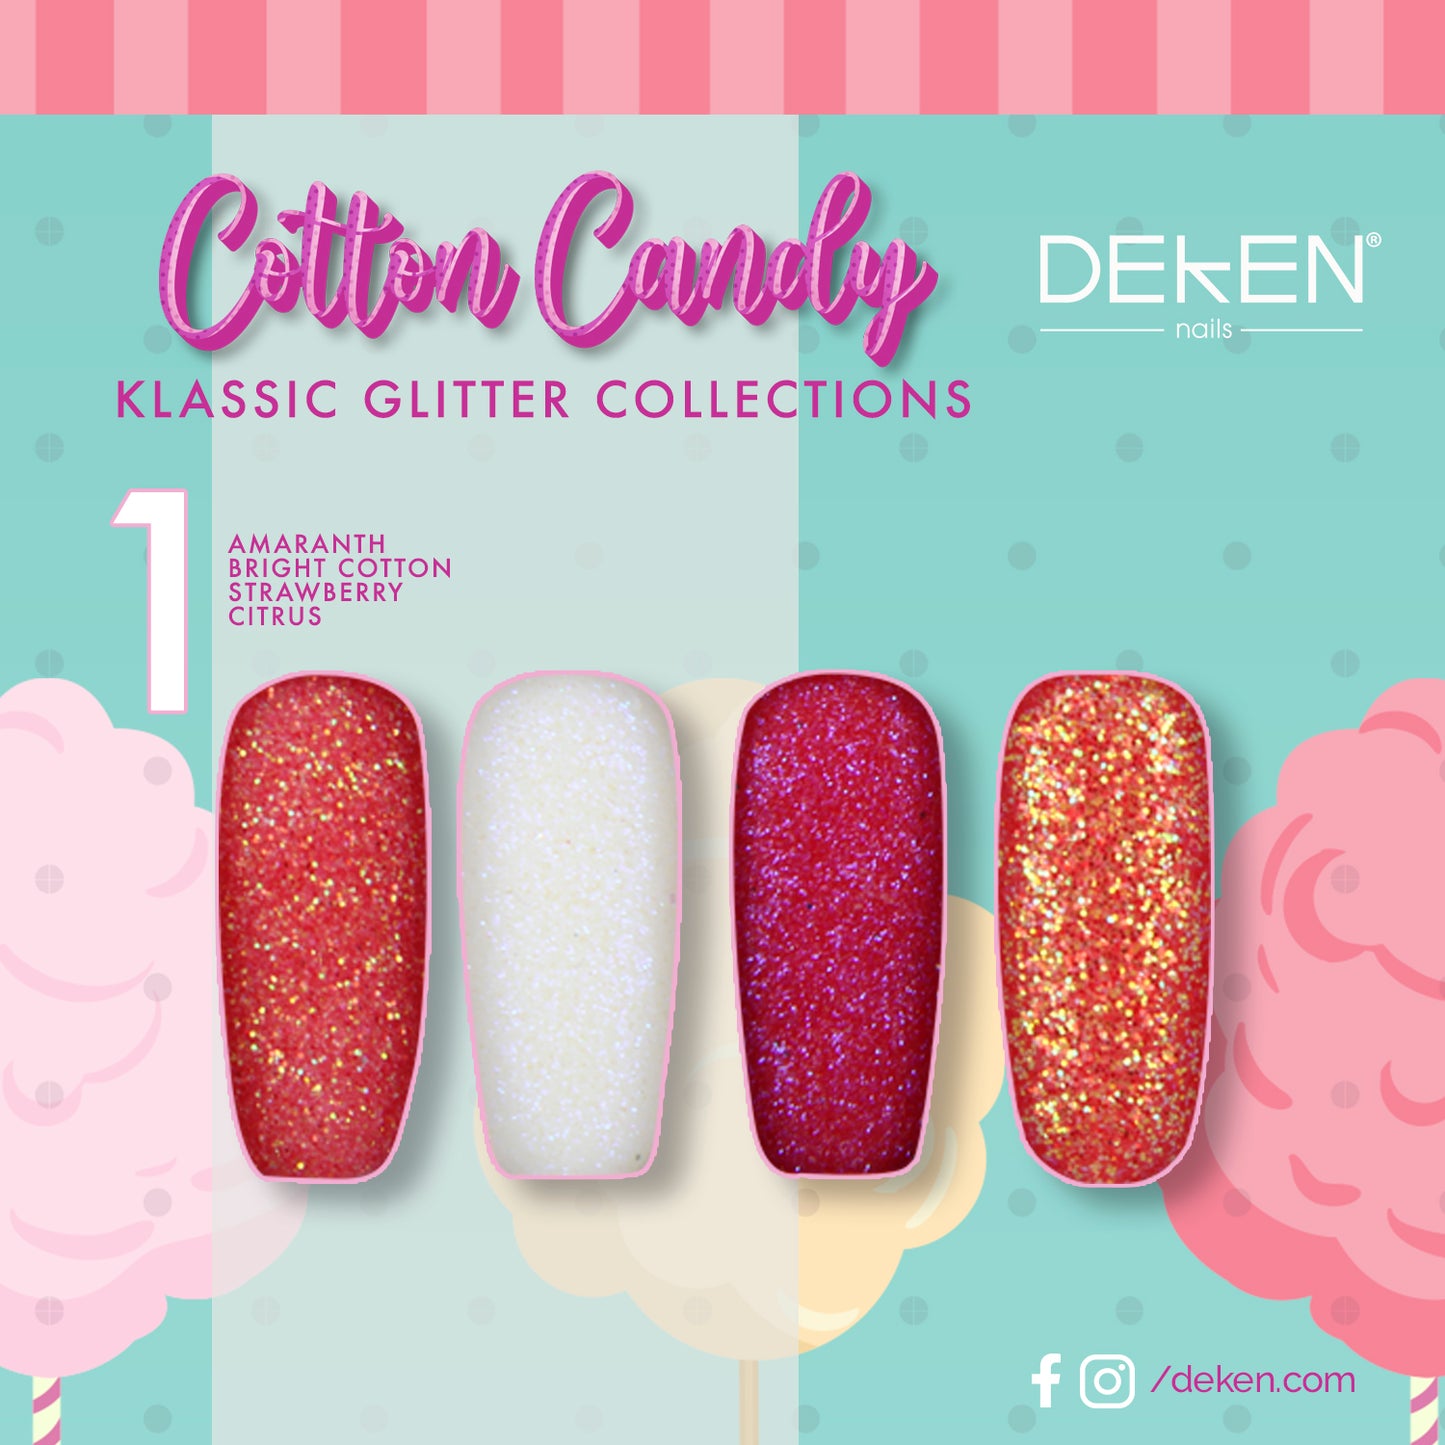 Deken Cotton Candy Glitter Collections